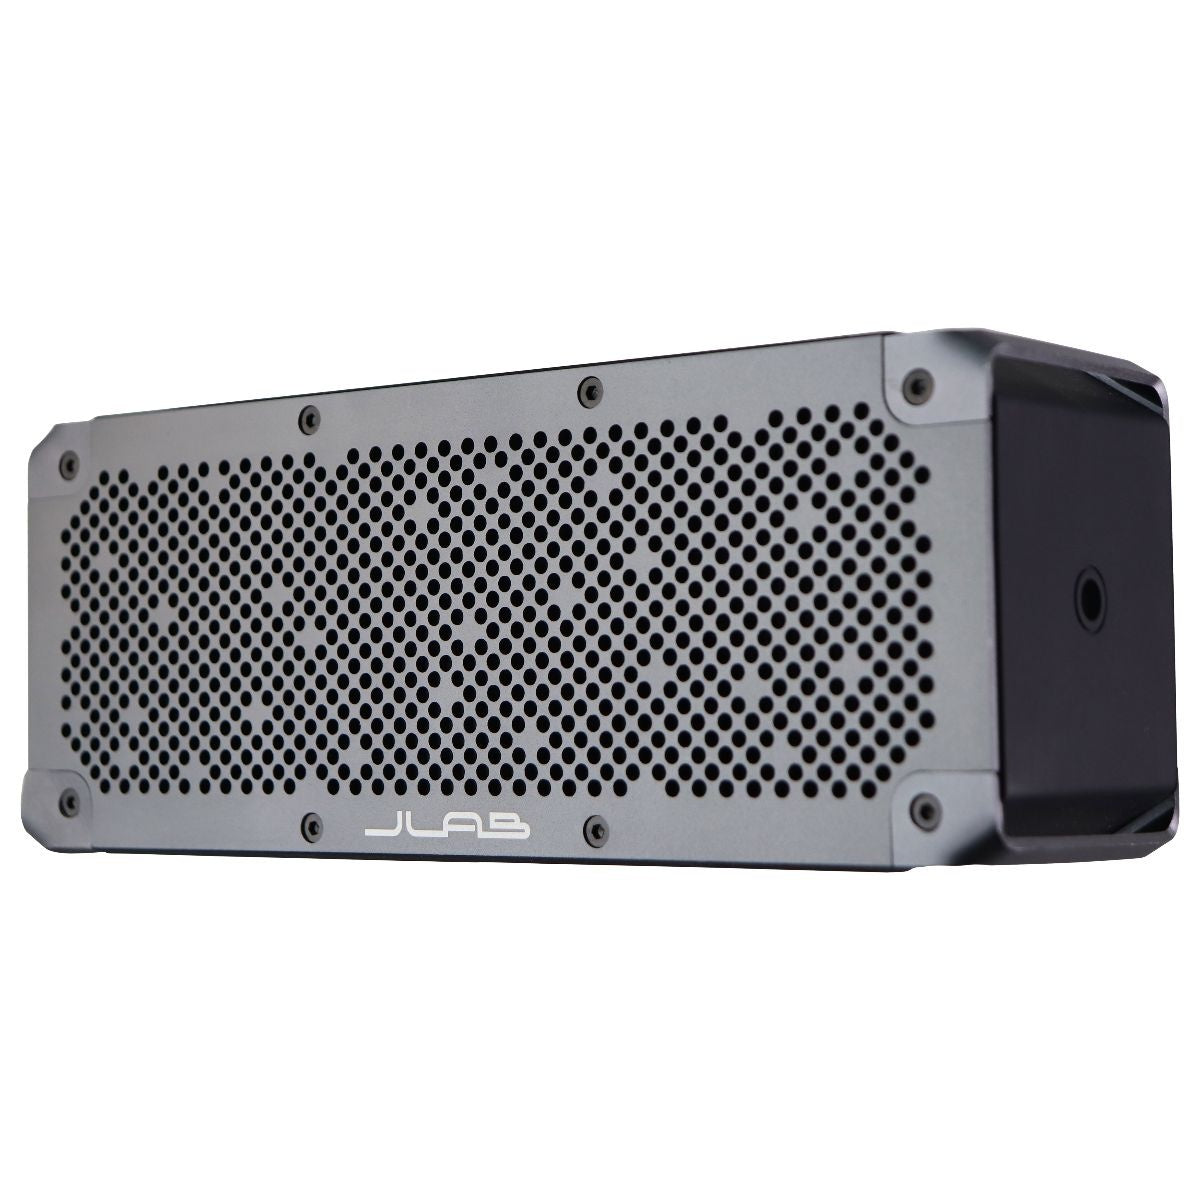 JLab Crasher XL Splashproof Portable Bluetooth Speaker - Gunmetal Gray Cell Phone - Audio Docks & Speakers JLAB    - Simple Cell Bulk Wholesale Pricing - USA Seller